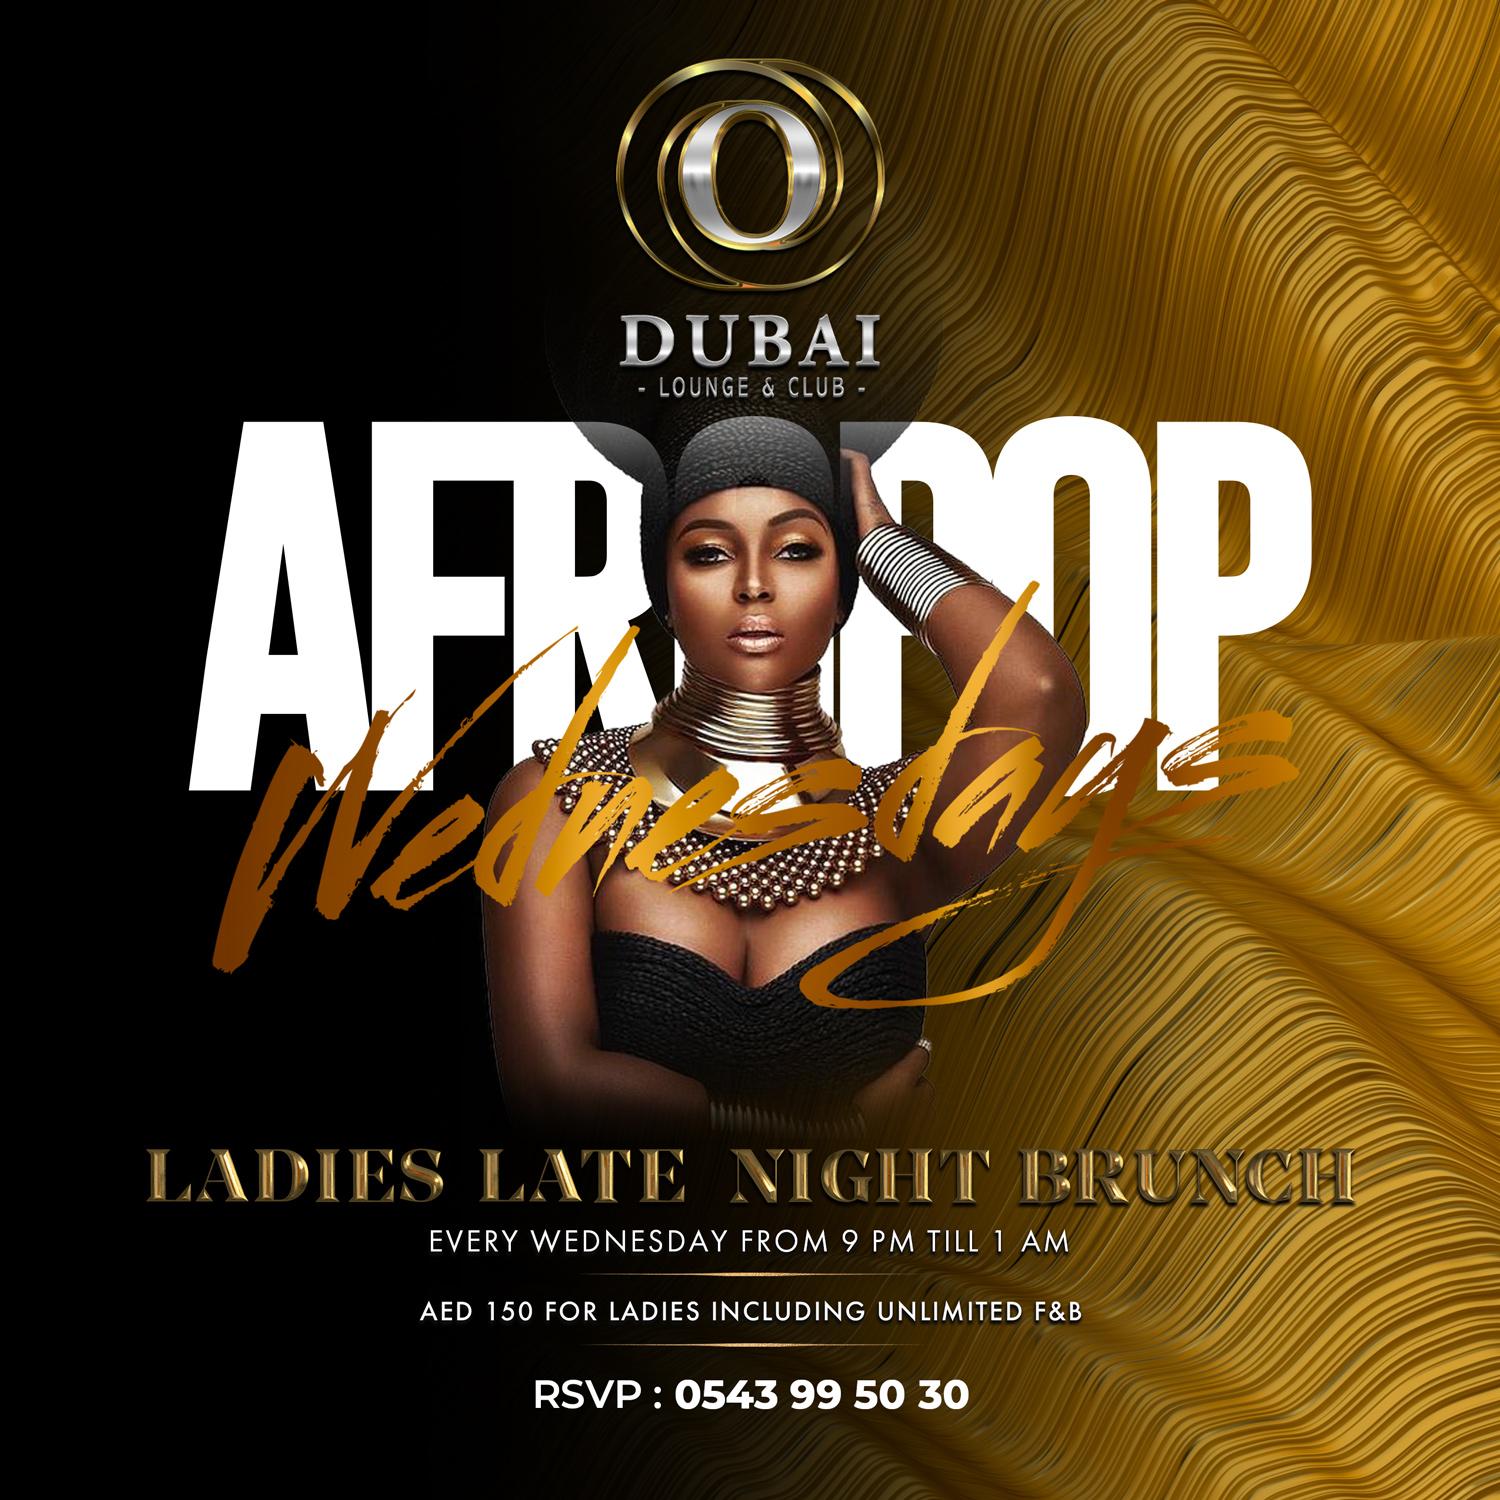 Afropop Wednesdays - Ladies Late Night Brunch